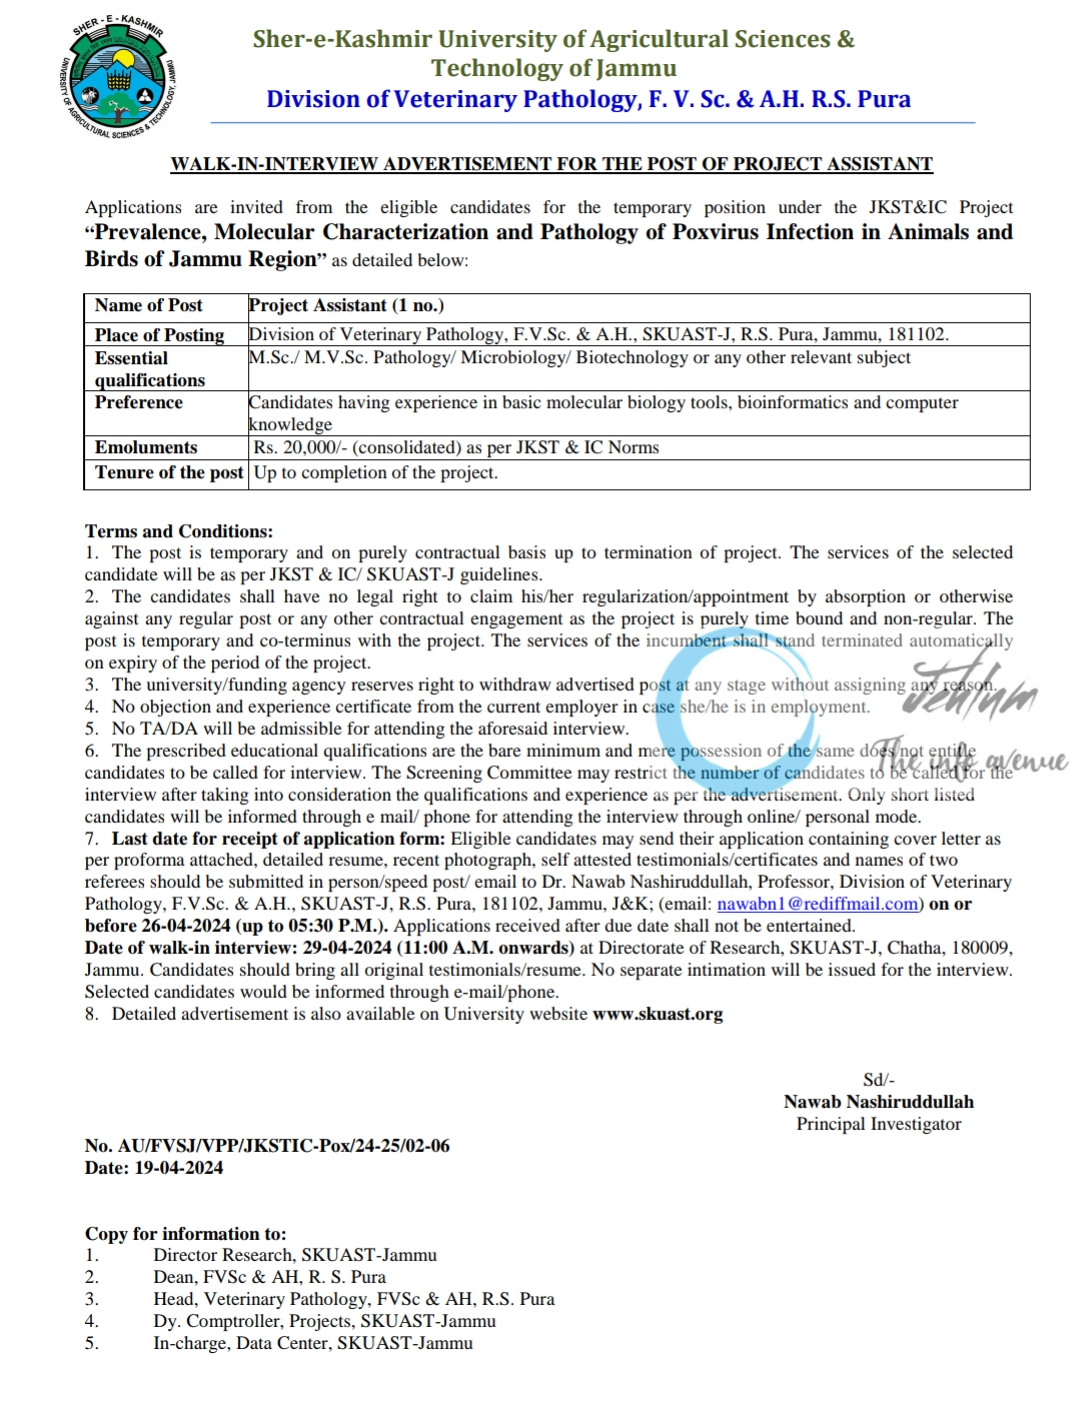 SKUAST-Jammu Division of Veterinary Pathology Walk-in-interview Advertisement 2024